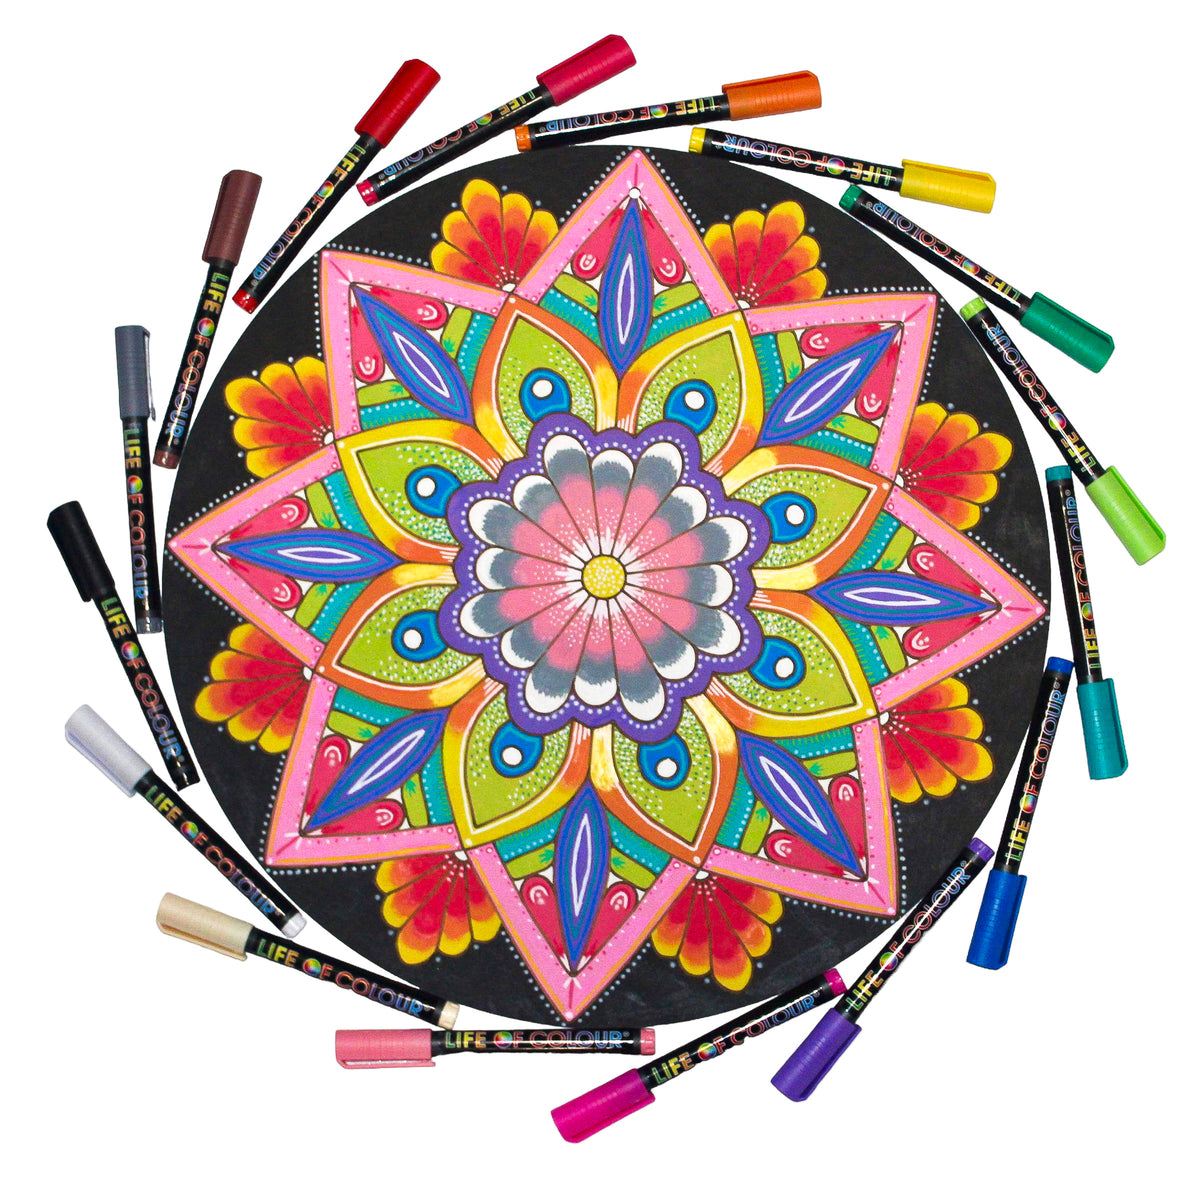 Life of Colour Black Mandala Painting Kit - In Bloom (Essentials)